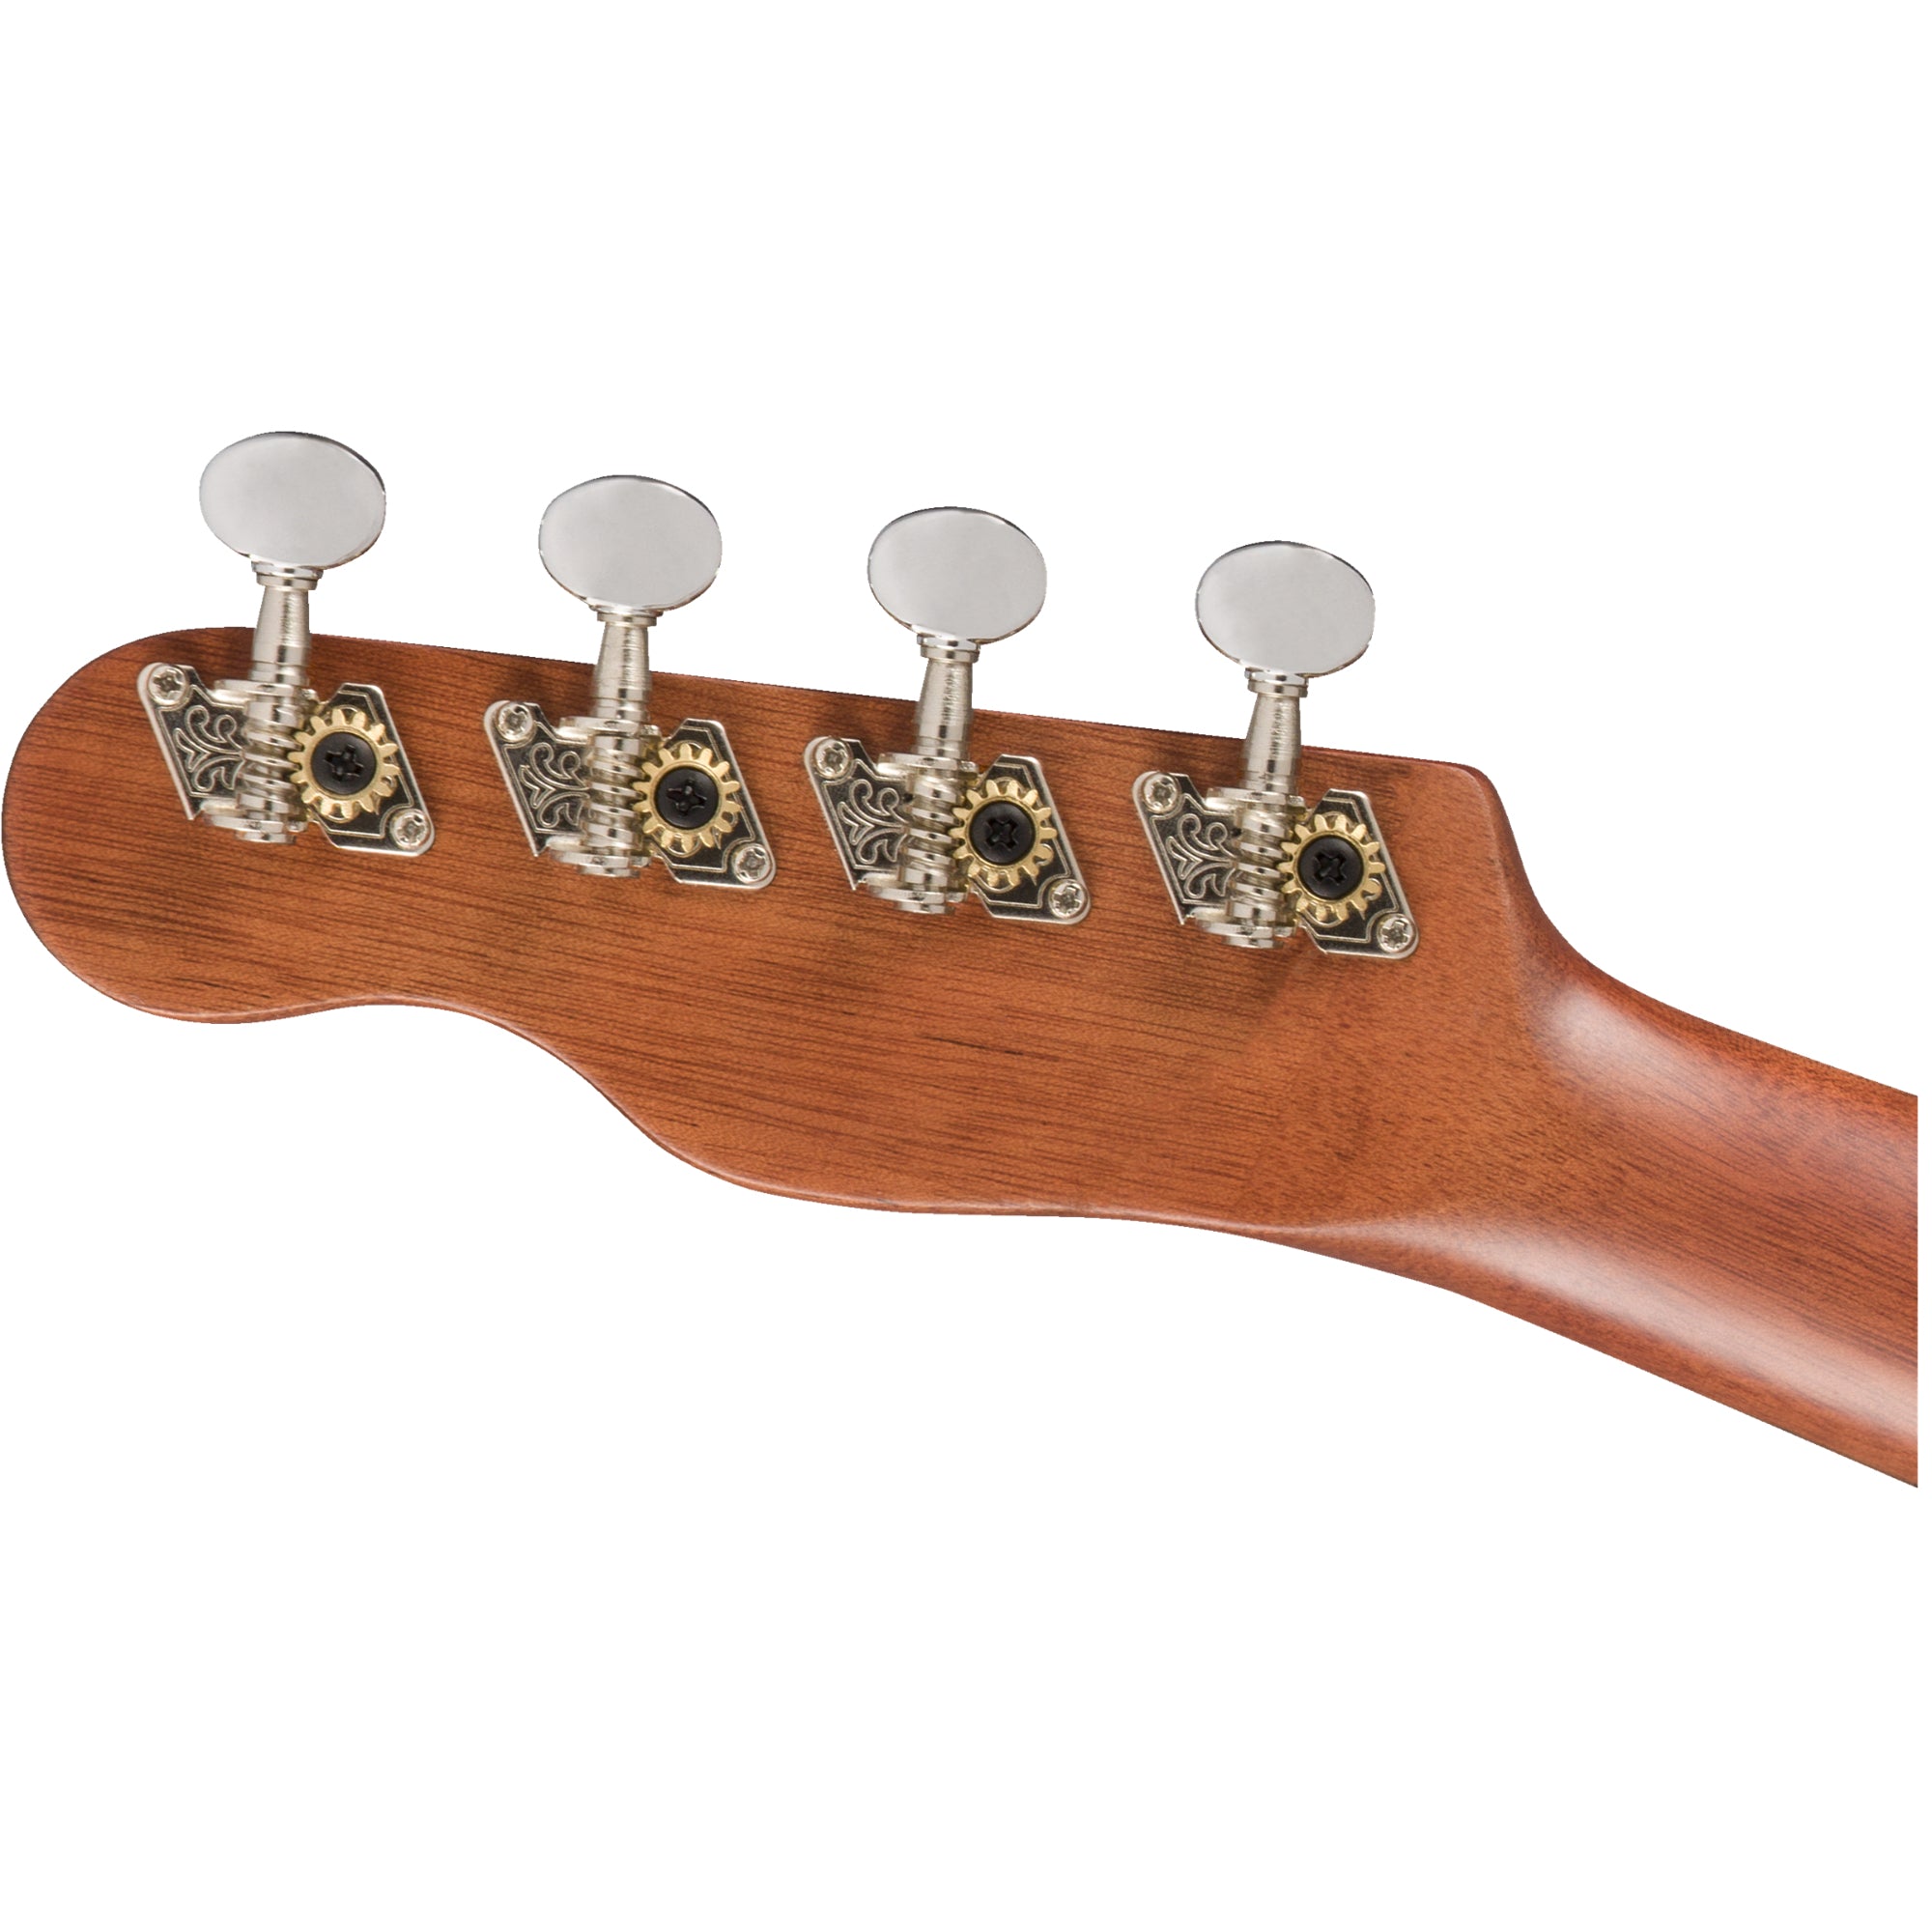 Fender Venice Soprano Ukulele, Walnut Fingerboard, Natural